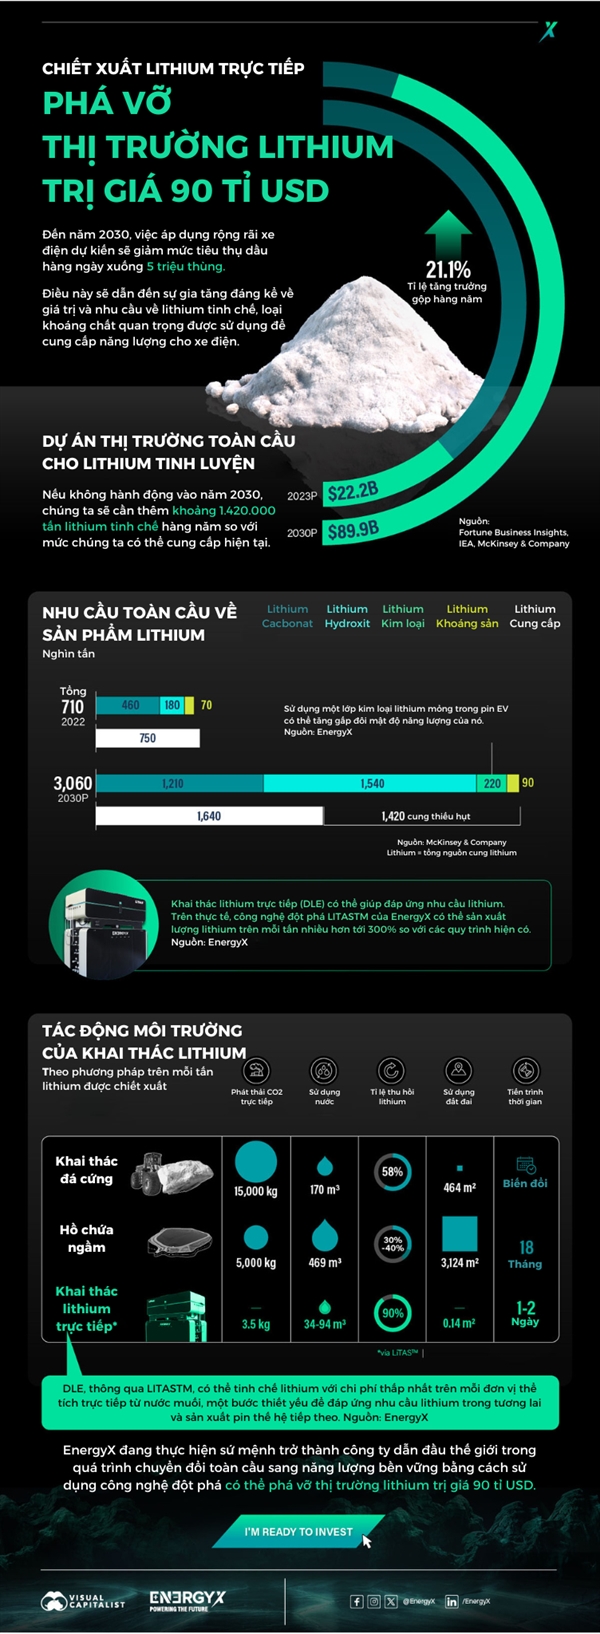 Nganh cong nghiep lithium tang len gan 90 ti USD vao nam 2030